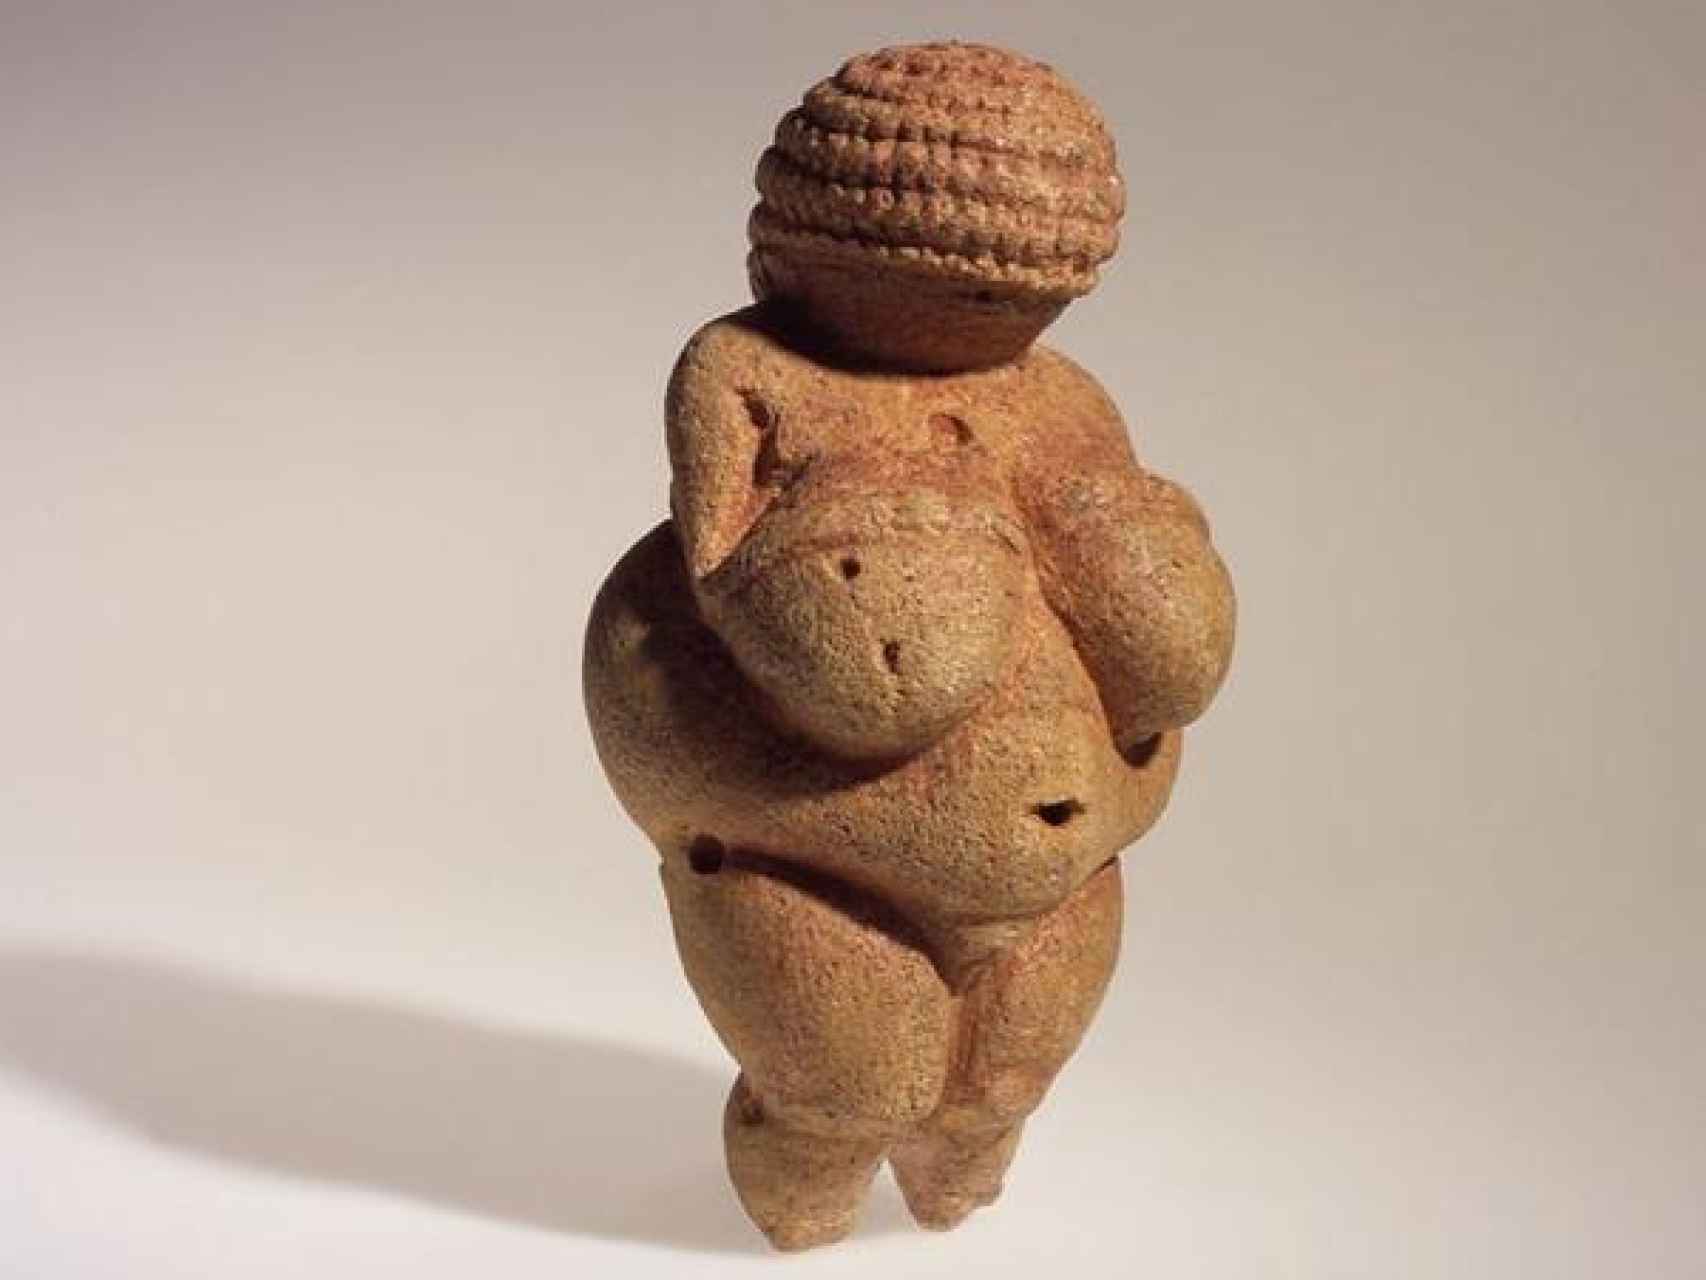 La Venus de Willendorf.